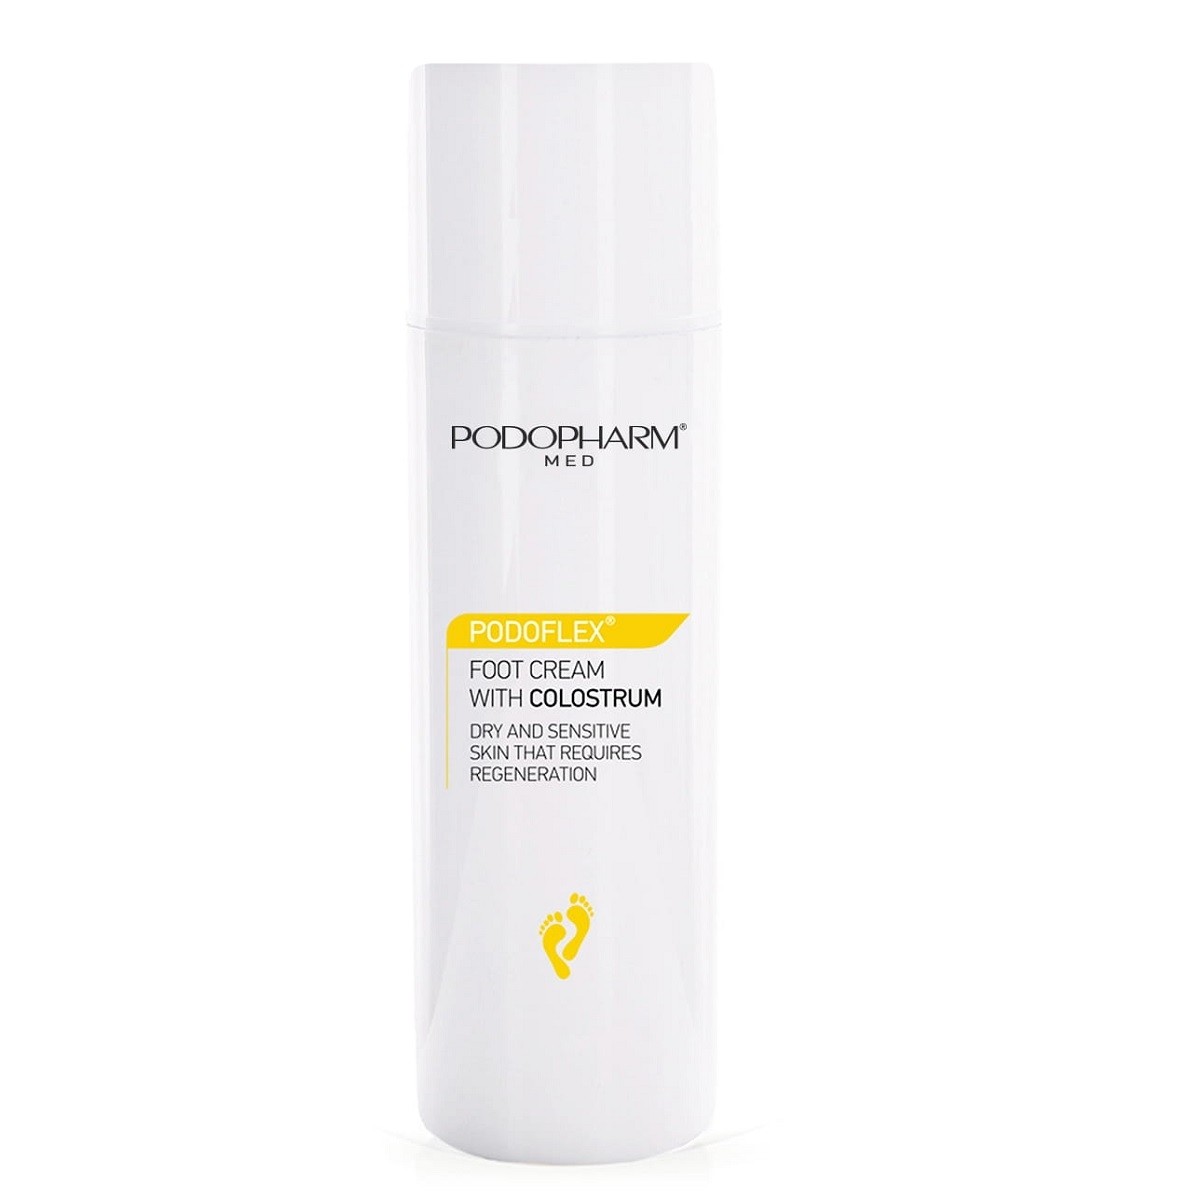 Podopharm Med Podoflex Foot Cream With Colostrum 150ml 